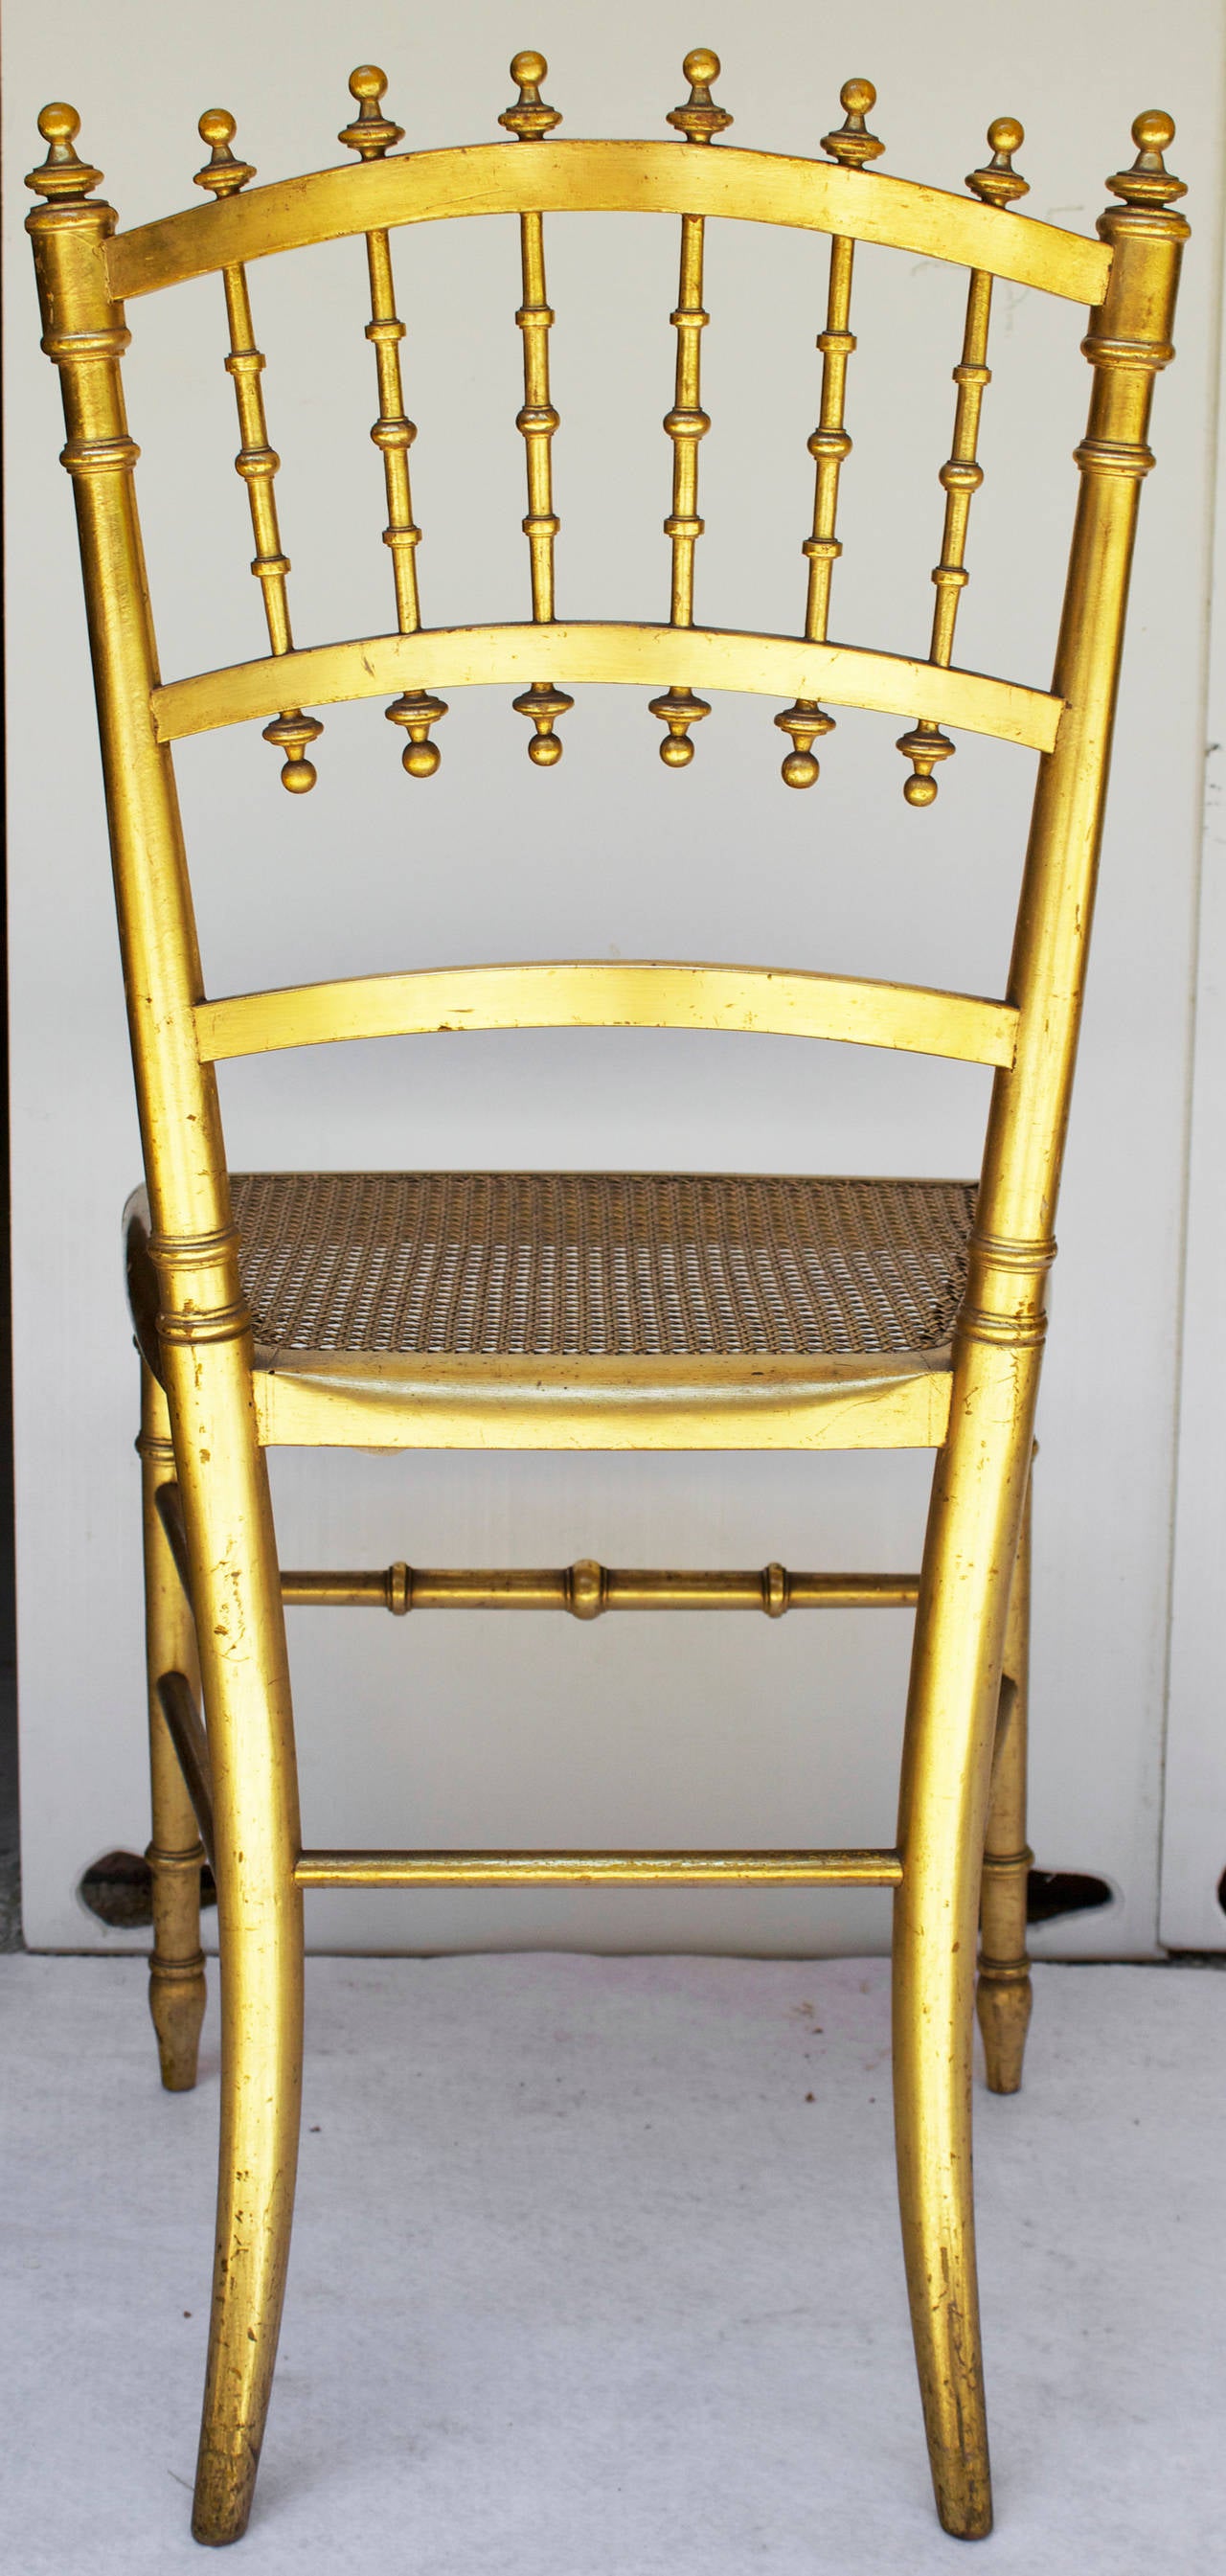 Adorable chairs of Napoleon III style, sometimes called 